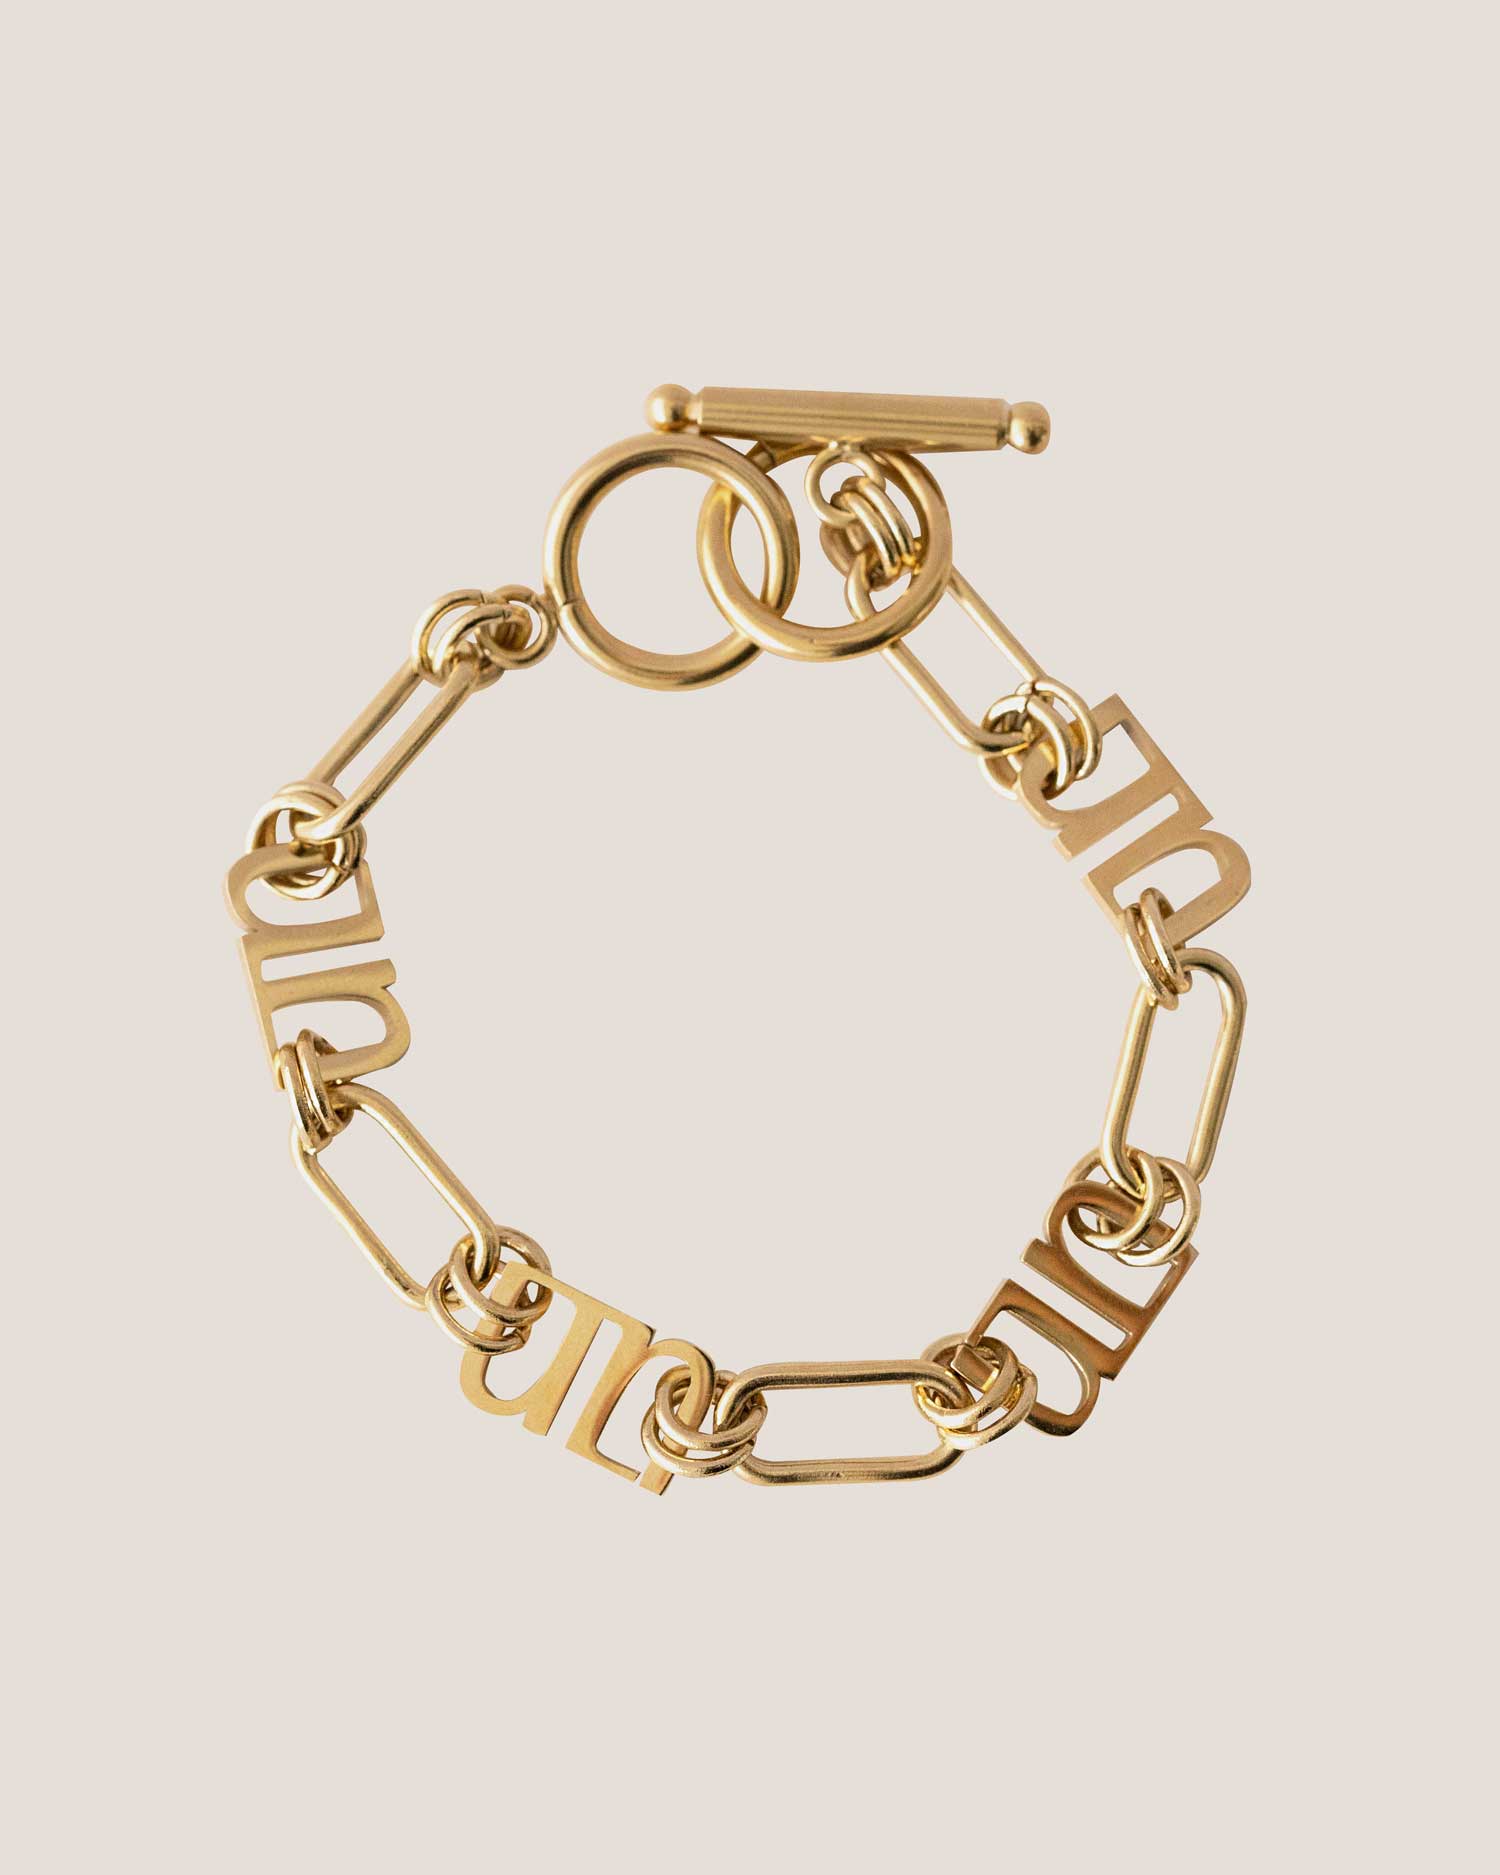 Gung Iconic Gold Chain Bracelet